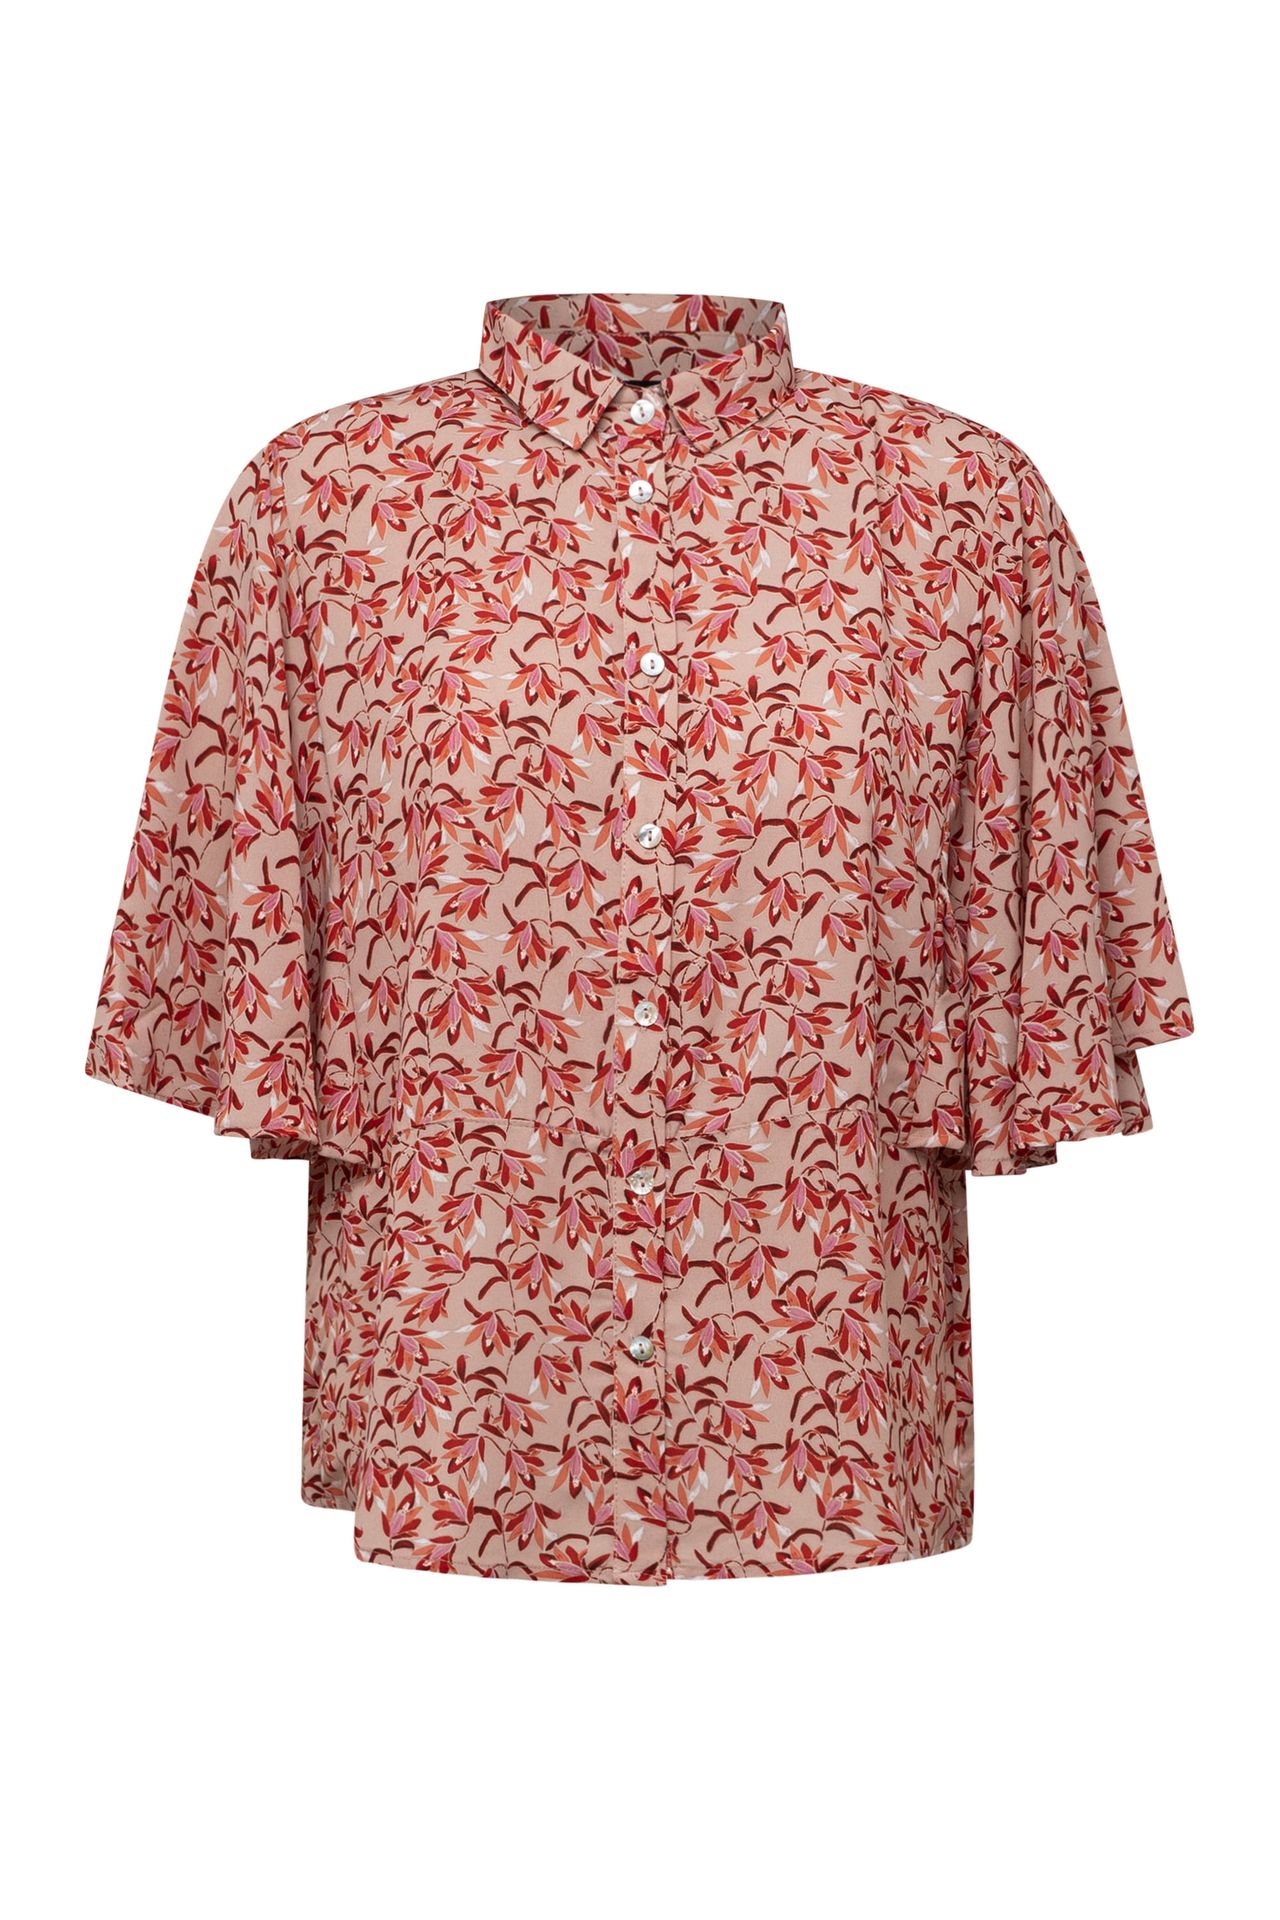 Norah Roze blouse met vlindermouwen rose multicolor 213932-910